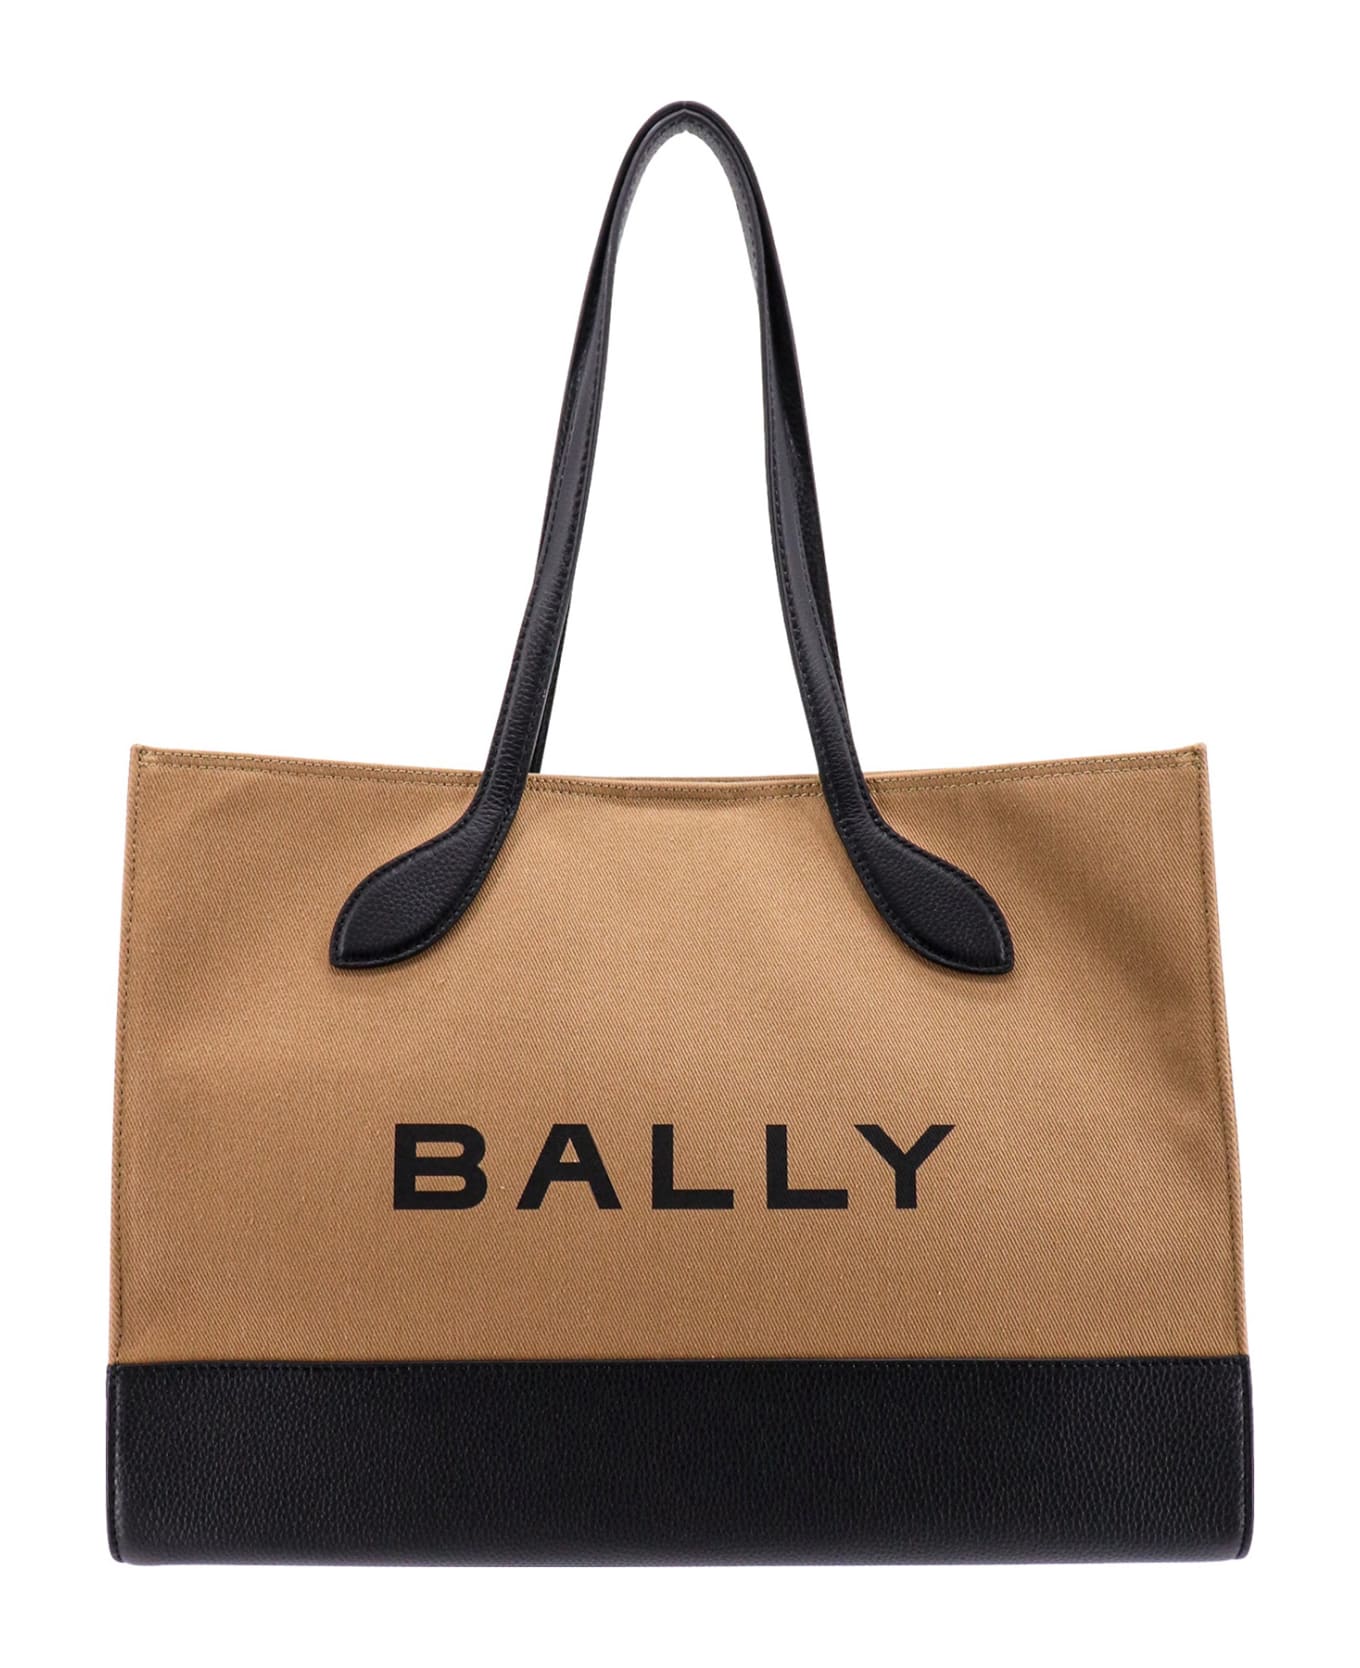 Bally Shoulder Bag - Brown ショルダーバッグ